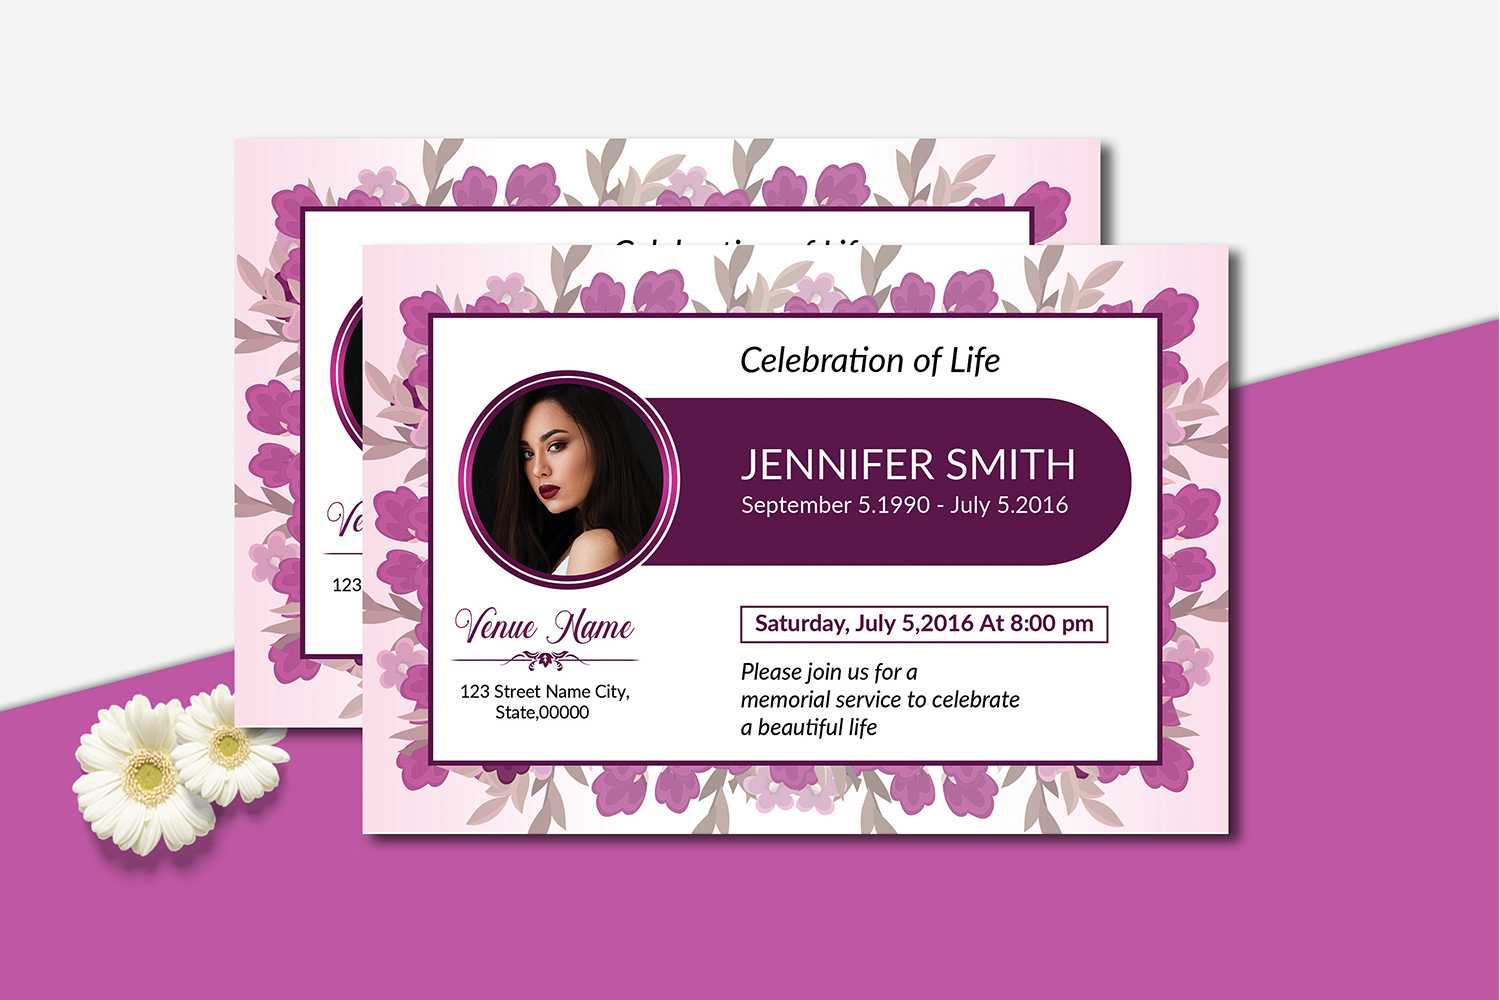 Funeral Announcement Invitation Card Template With Regard To Funeral Invitation Card Template